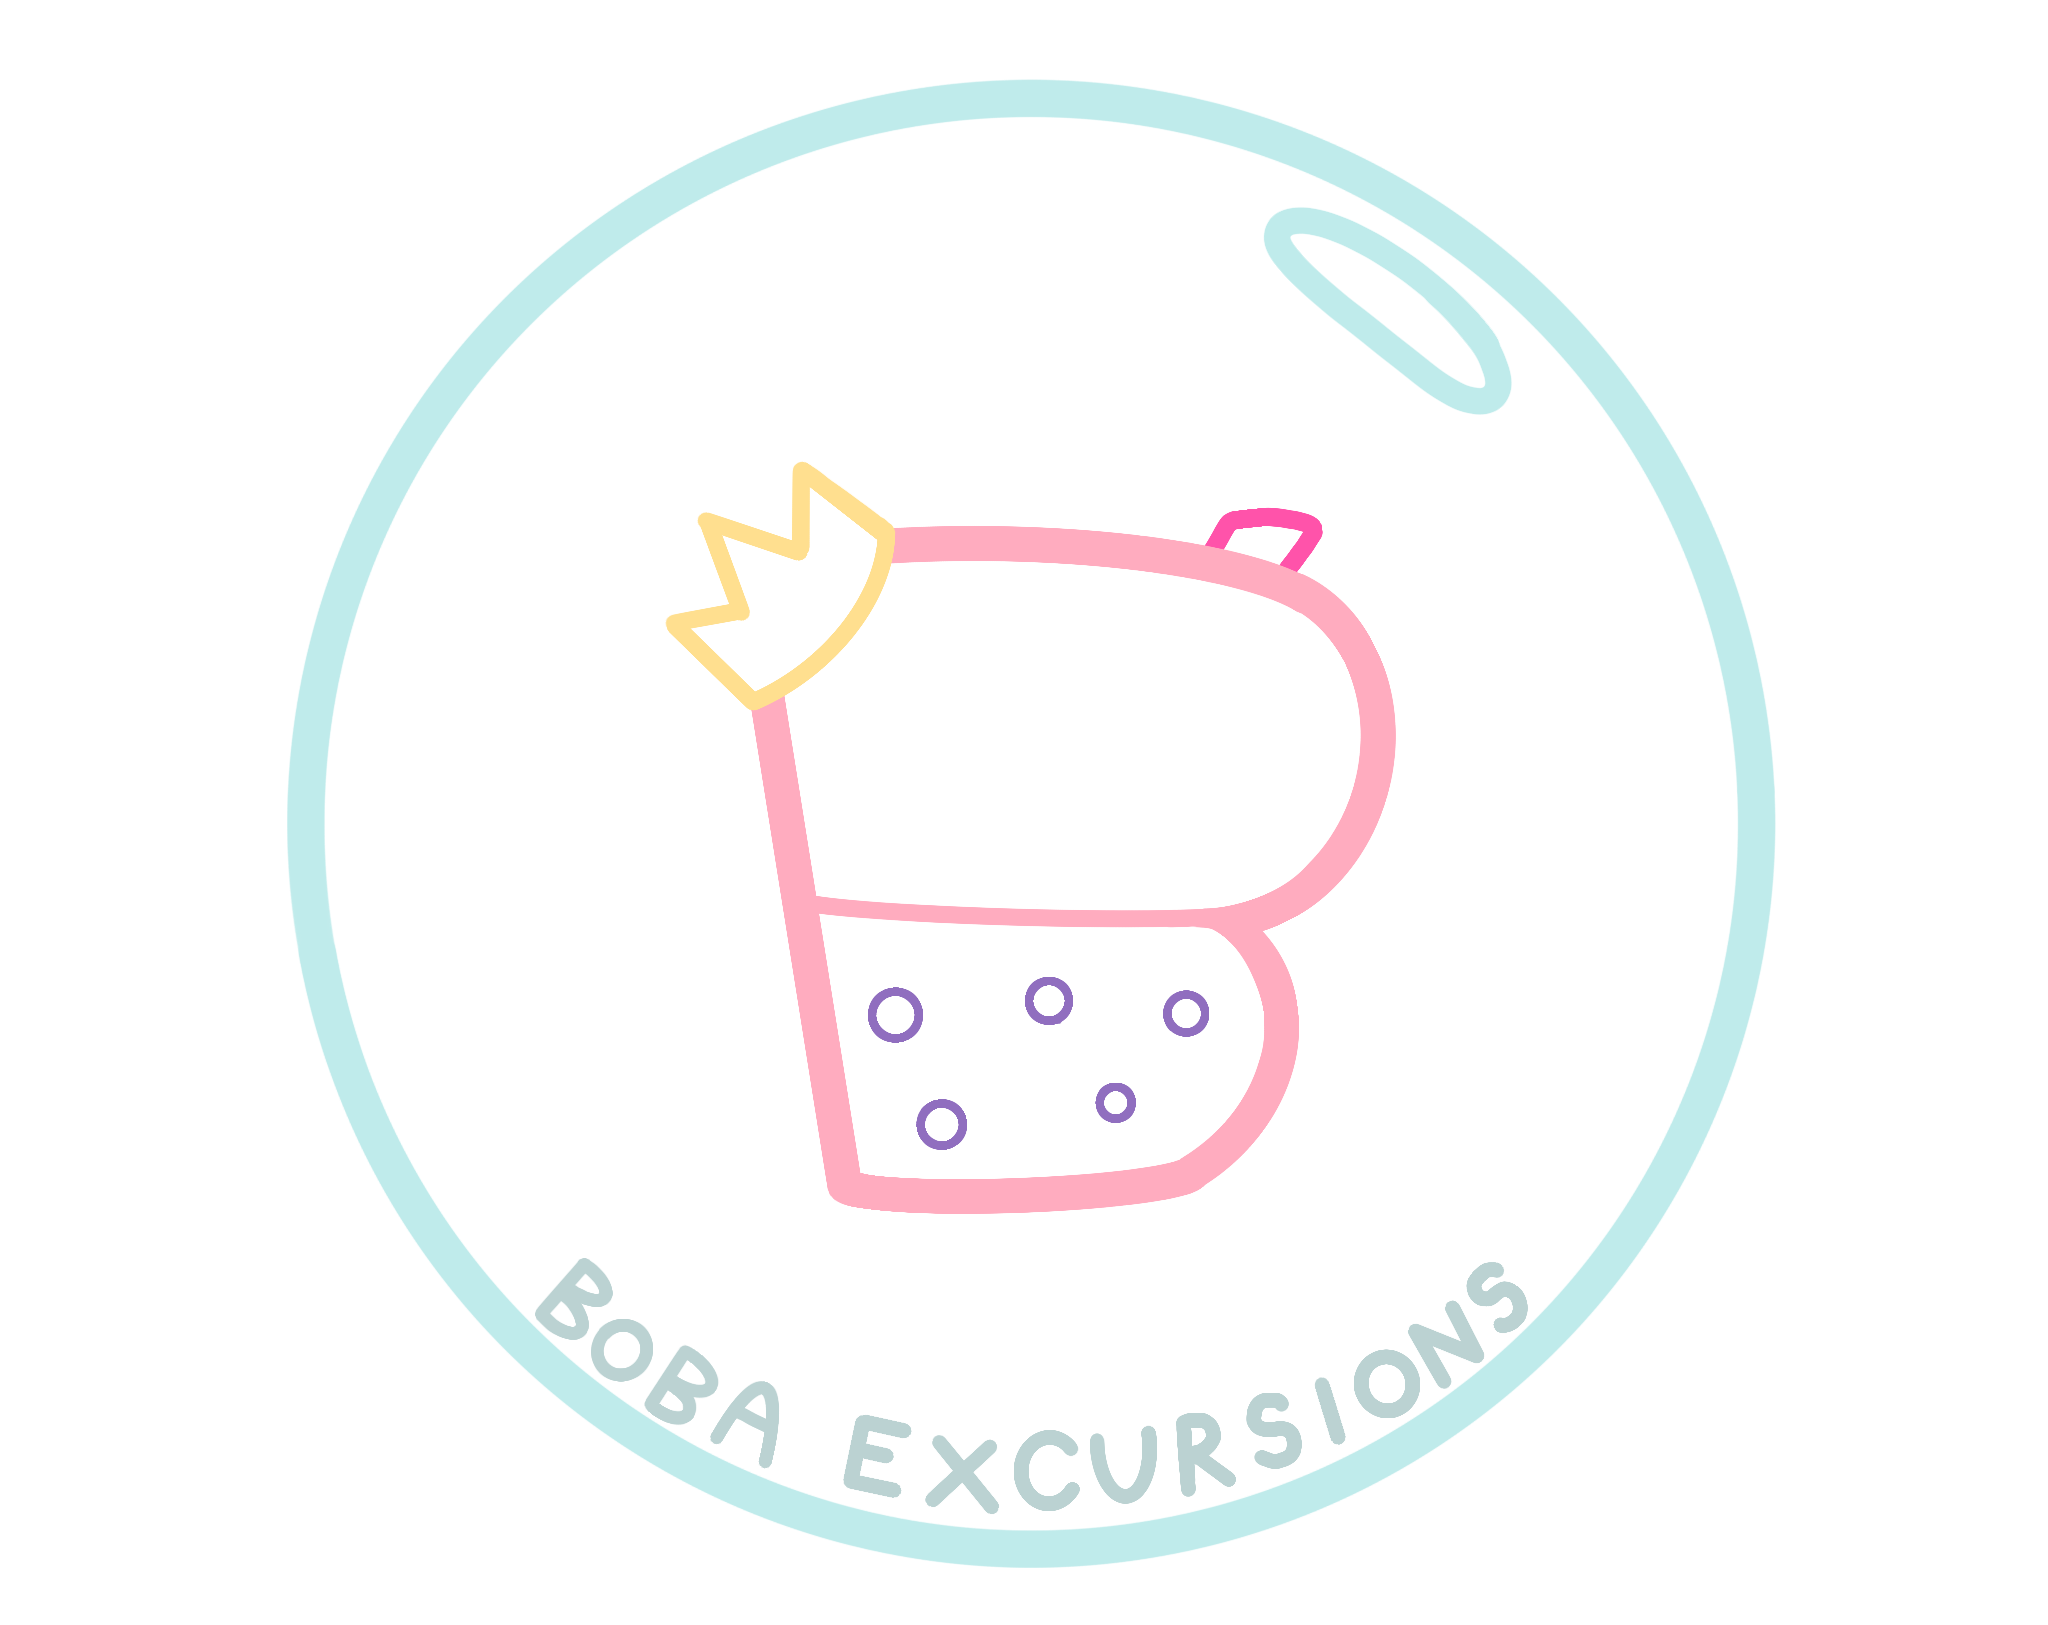 Boba Excursions